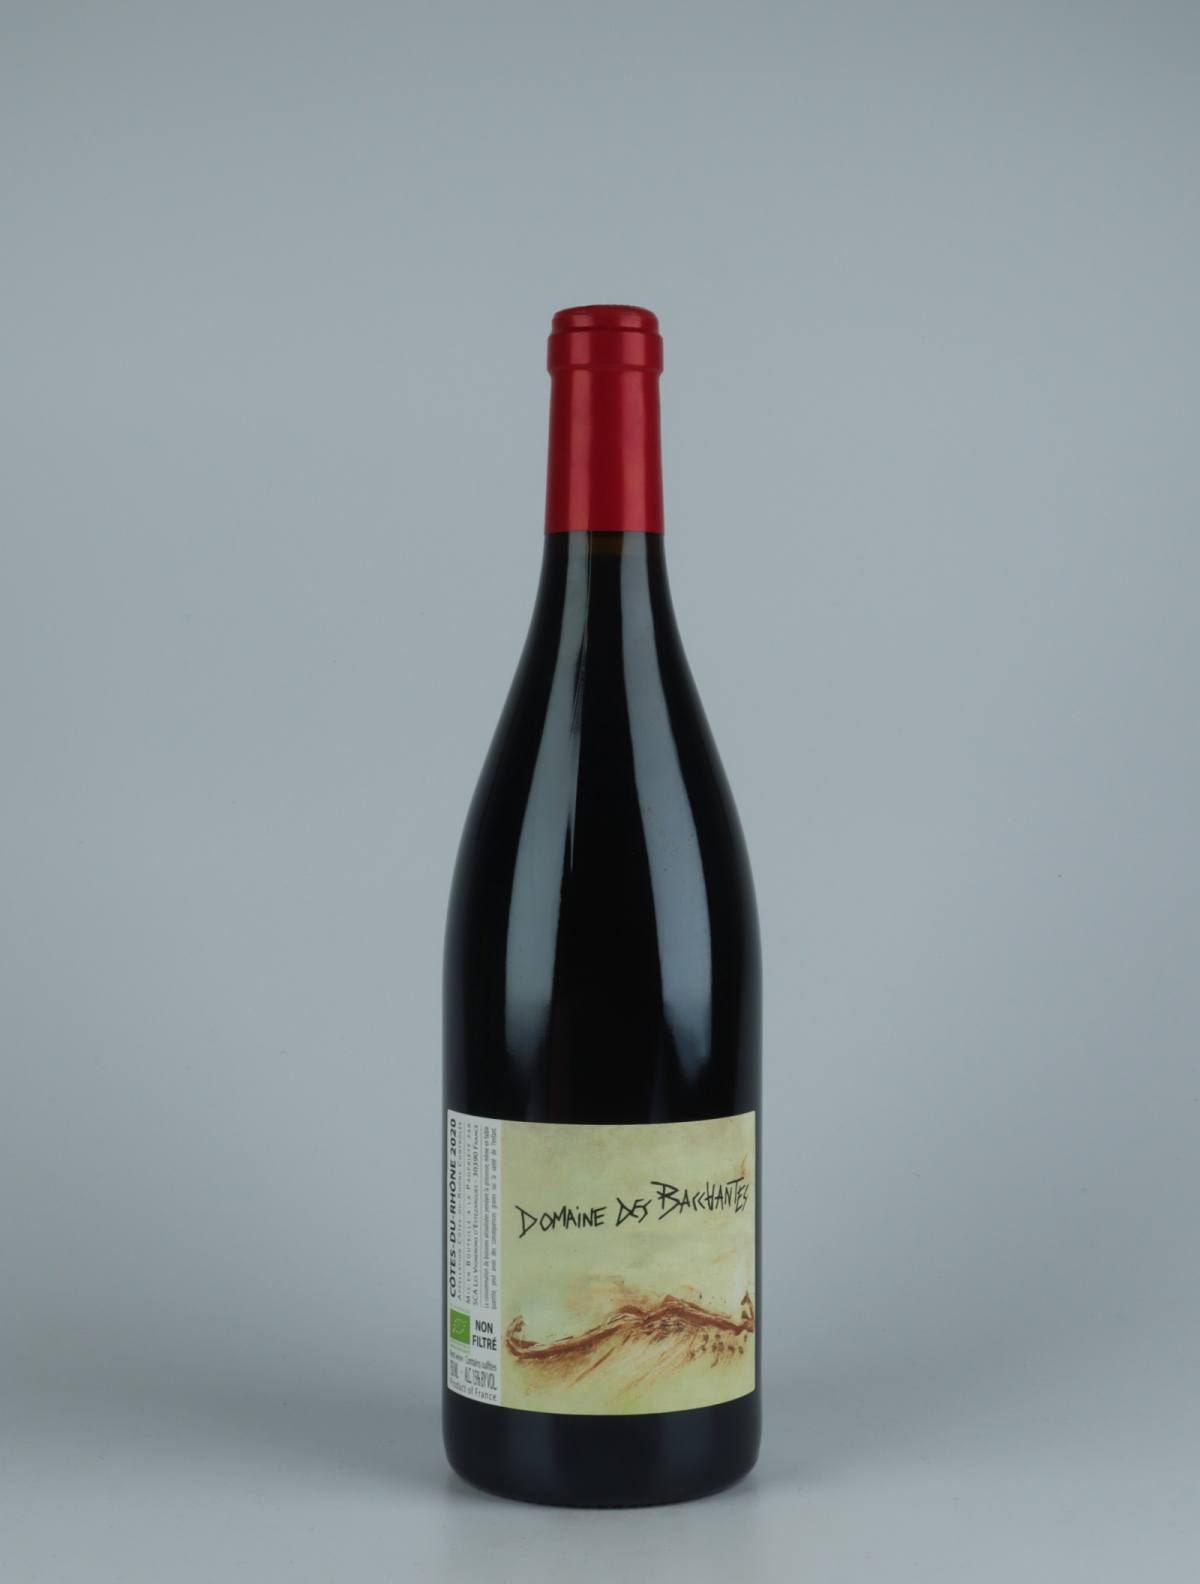 A bottle 2020 Côtes du Rhône - Domaine des Bacchantes Red wine from , Rhône in France